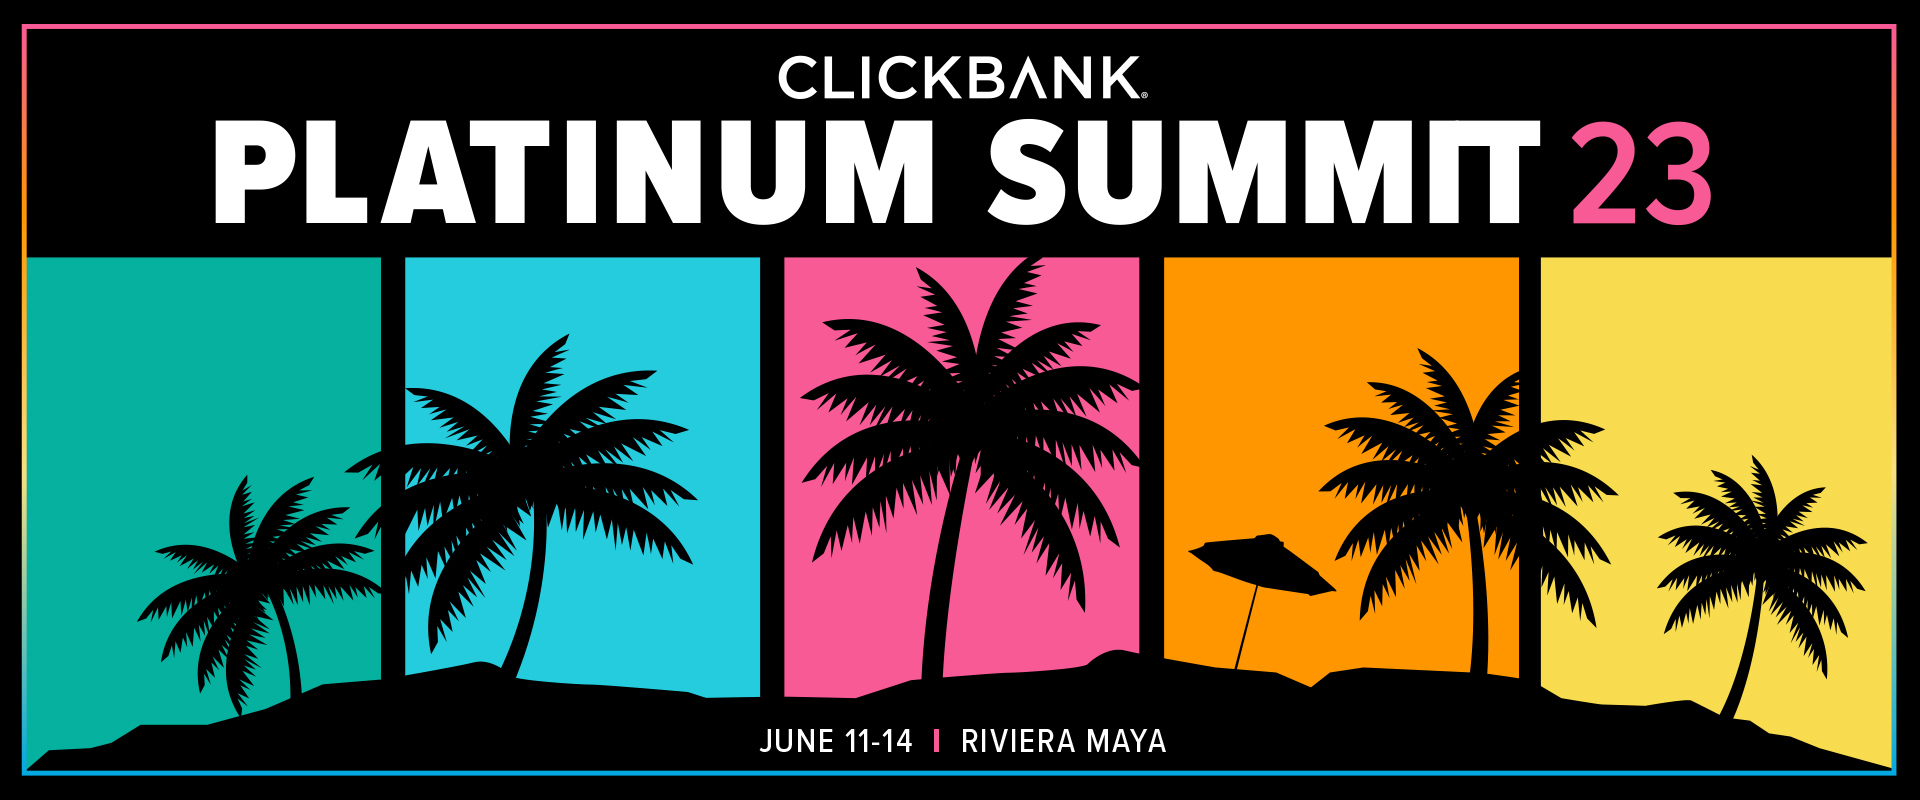 Clickbank Platinum Summit Logo